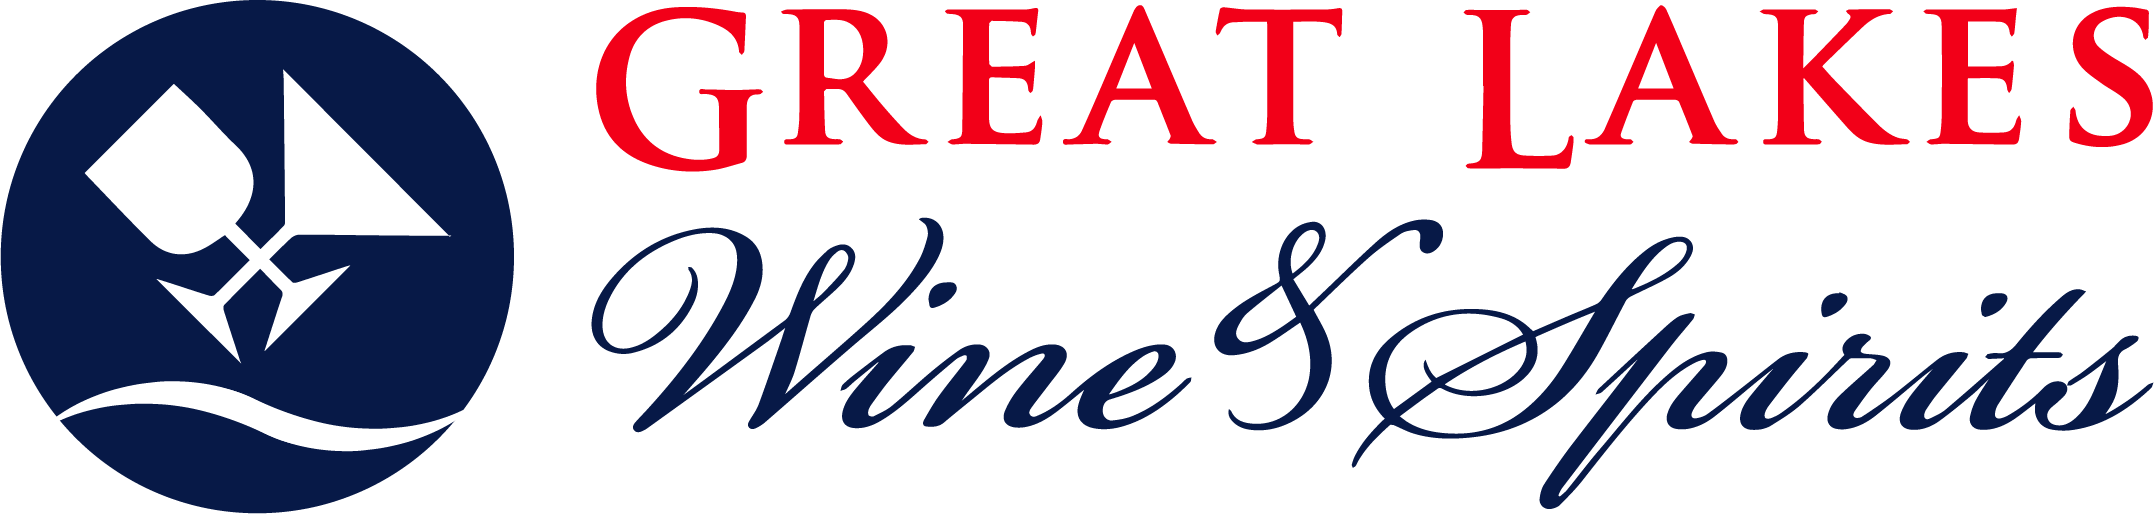 Great Lakes Wine and Spirits Logo